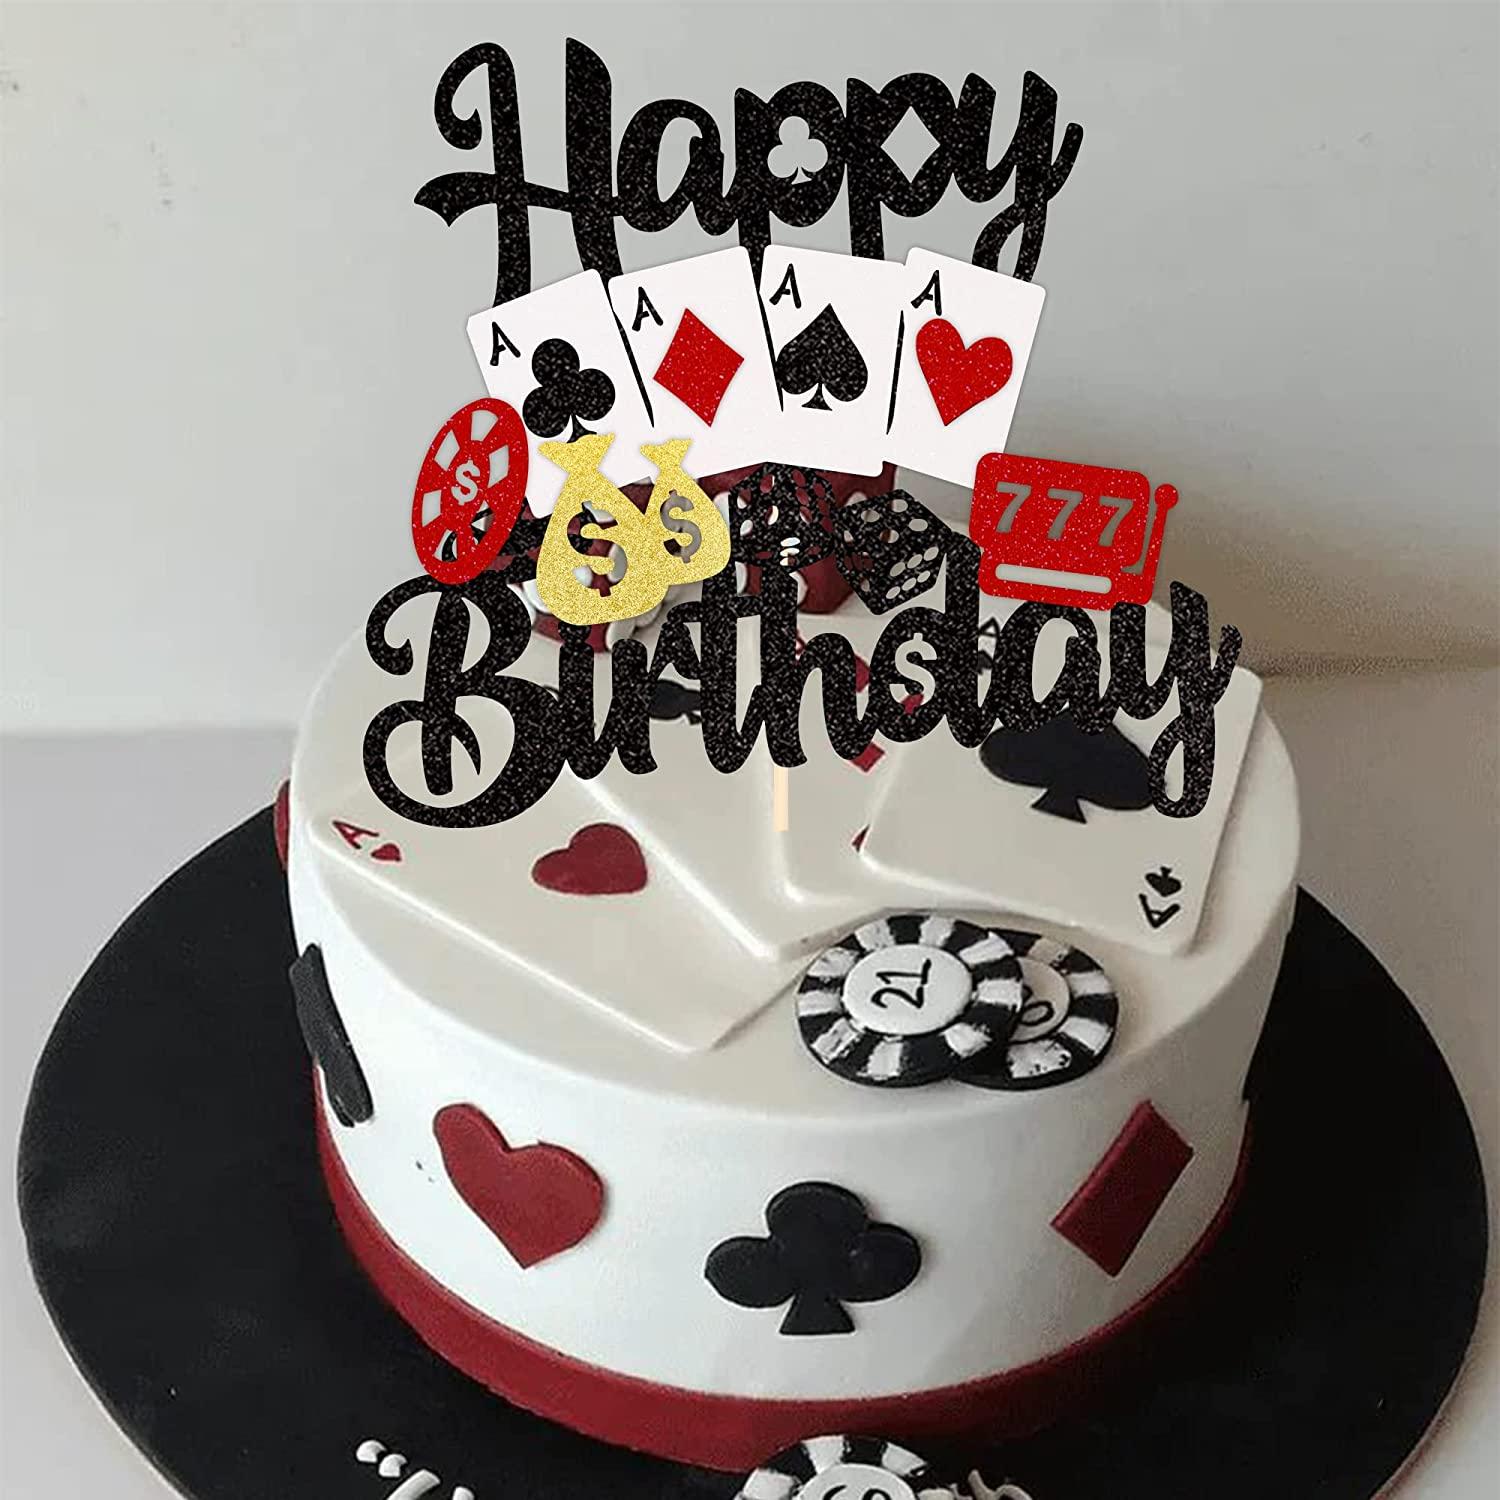 Best Birthday Cakes Las Vegas | Casino Themed Birthday Cakes - 9pc Party  Cake Topper - Aliexpress